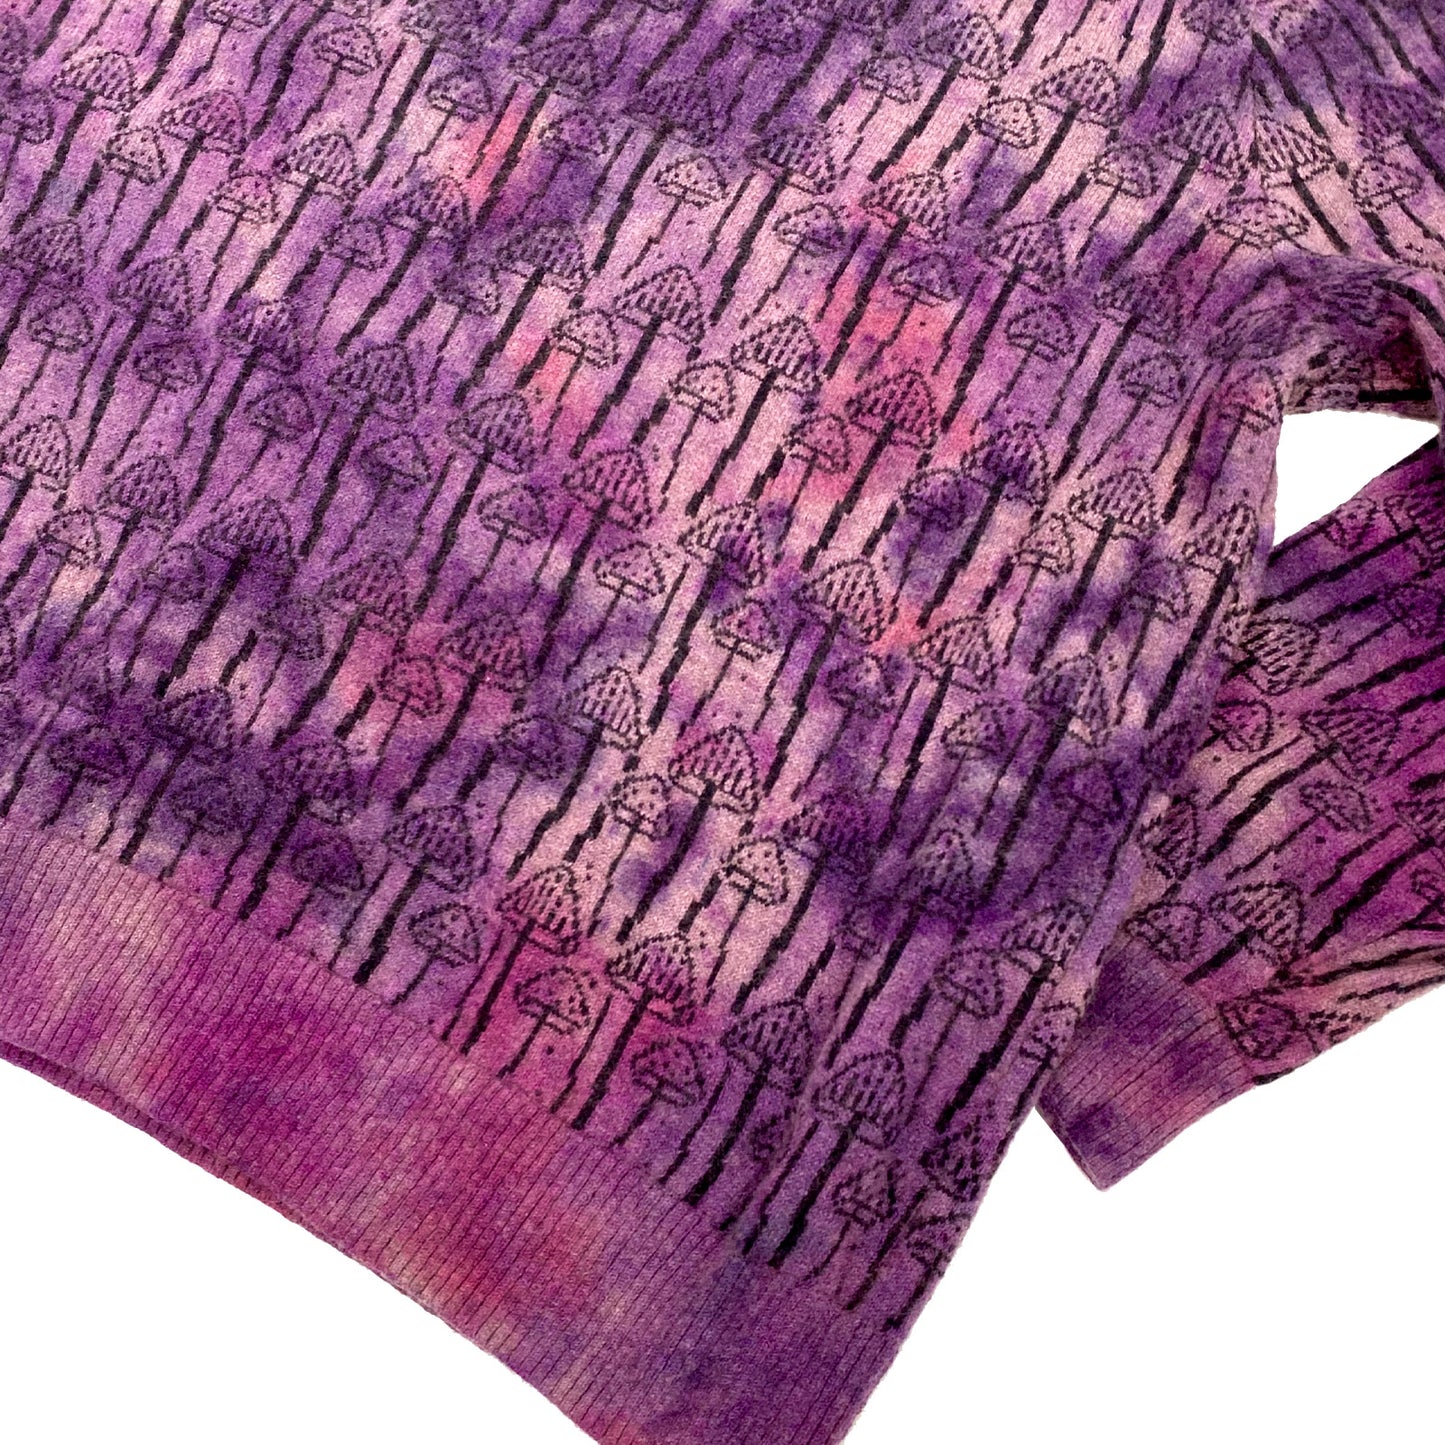 SAMPLE SALE purple tie-dyed Magic Jumper SIZE L/XL